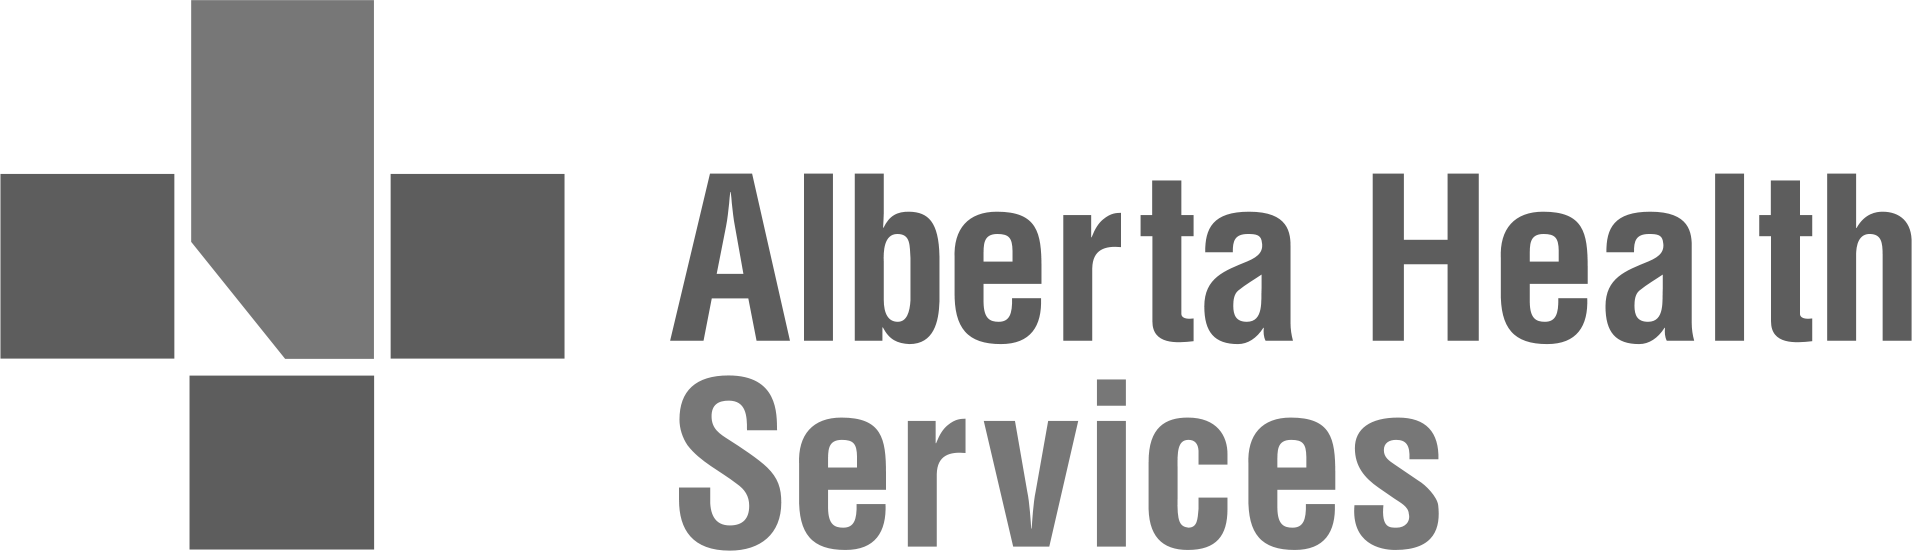 Screen Test – Alberta Health Services logo